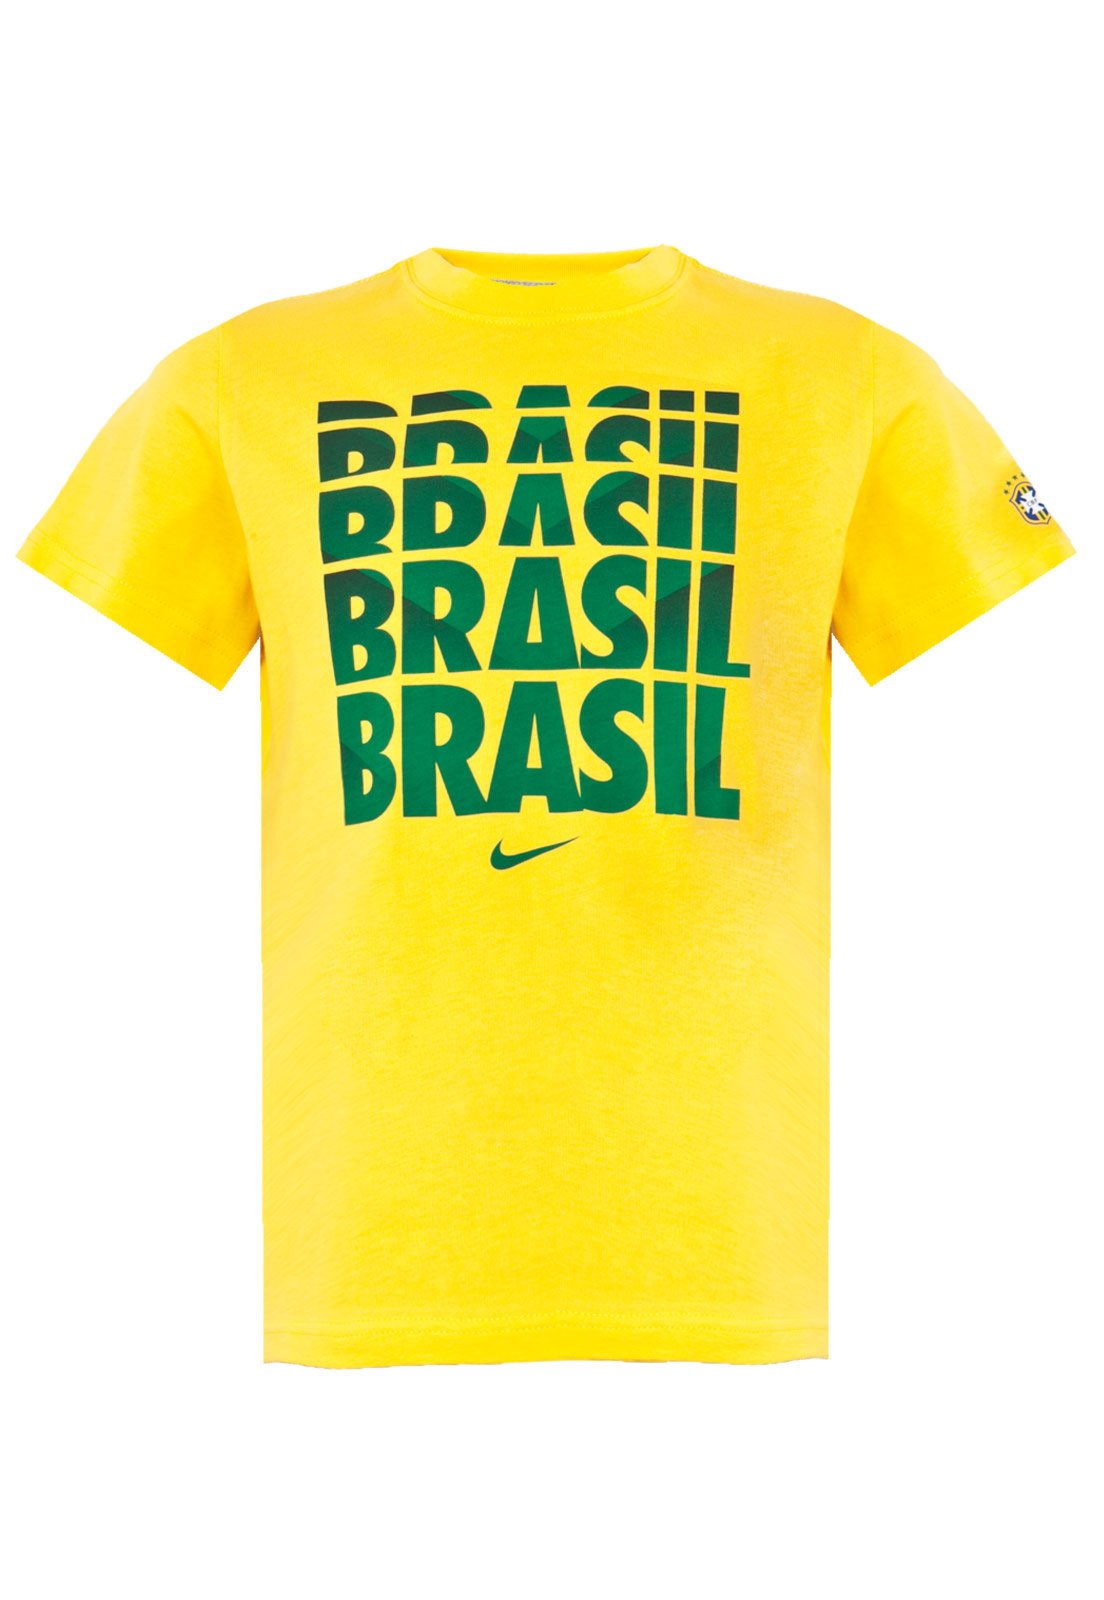 https://static.dafiti.com.br/p/Nike-Camiseta-Nike-CBF-Brasil-Blockbuster-Amarela-1216-8101141-1-zoom.jpg